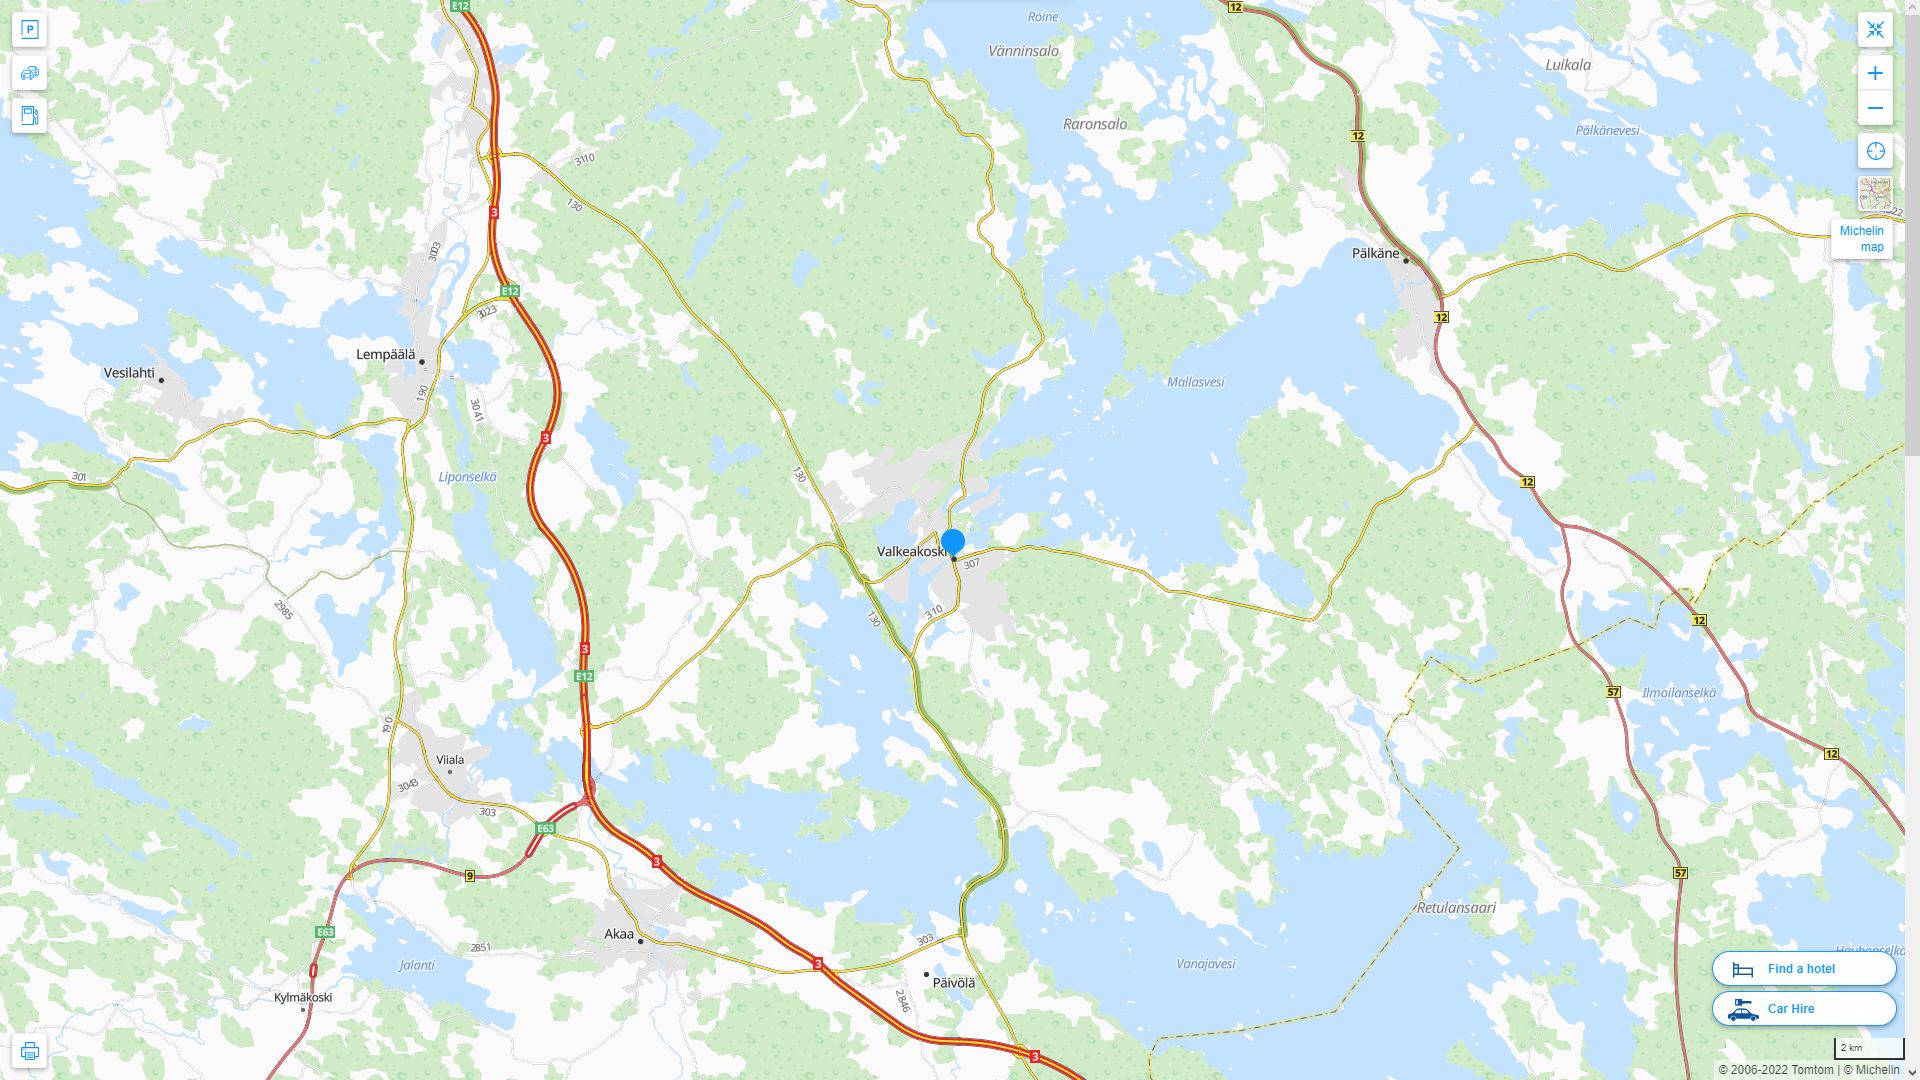 Valkeakoski Highway and Road Map